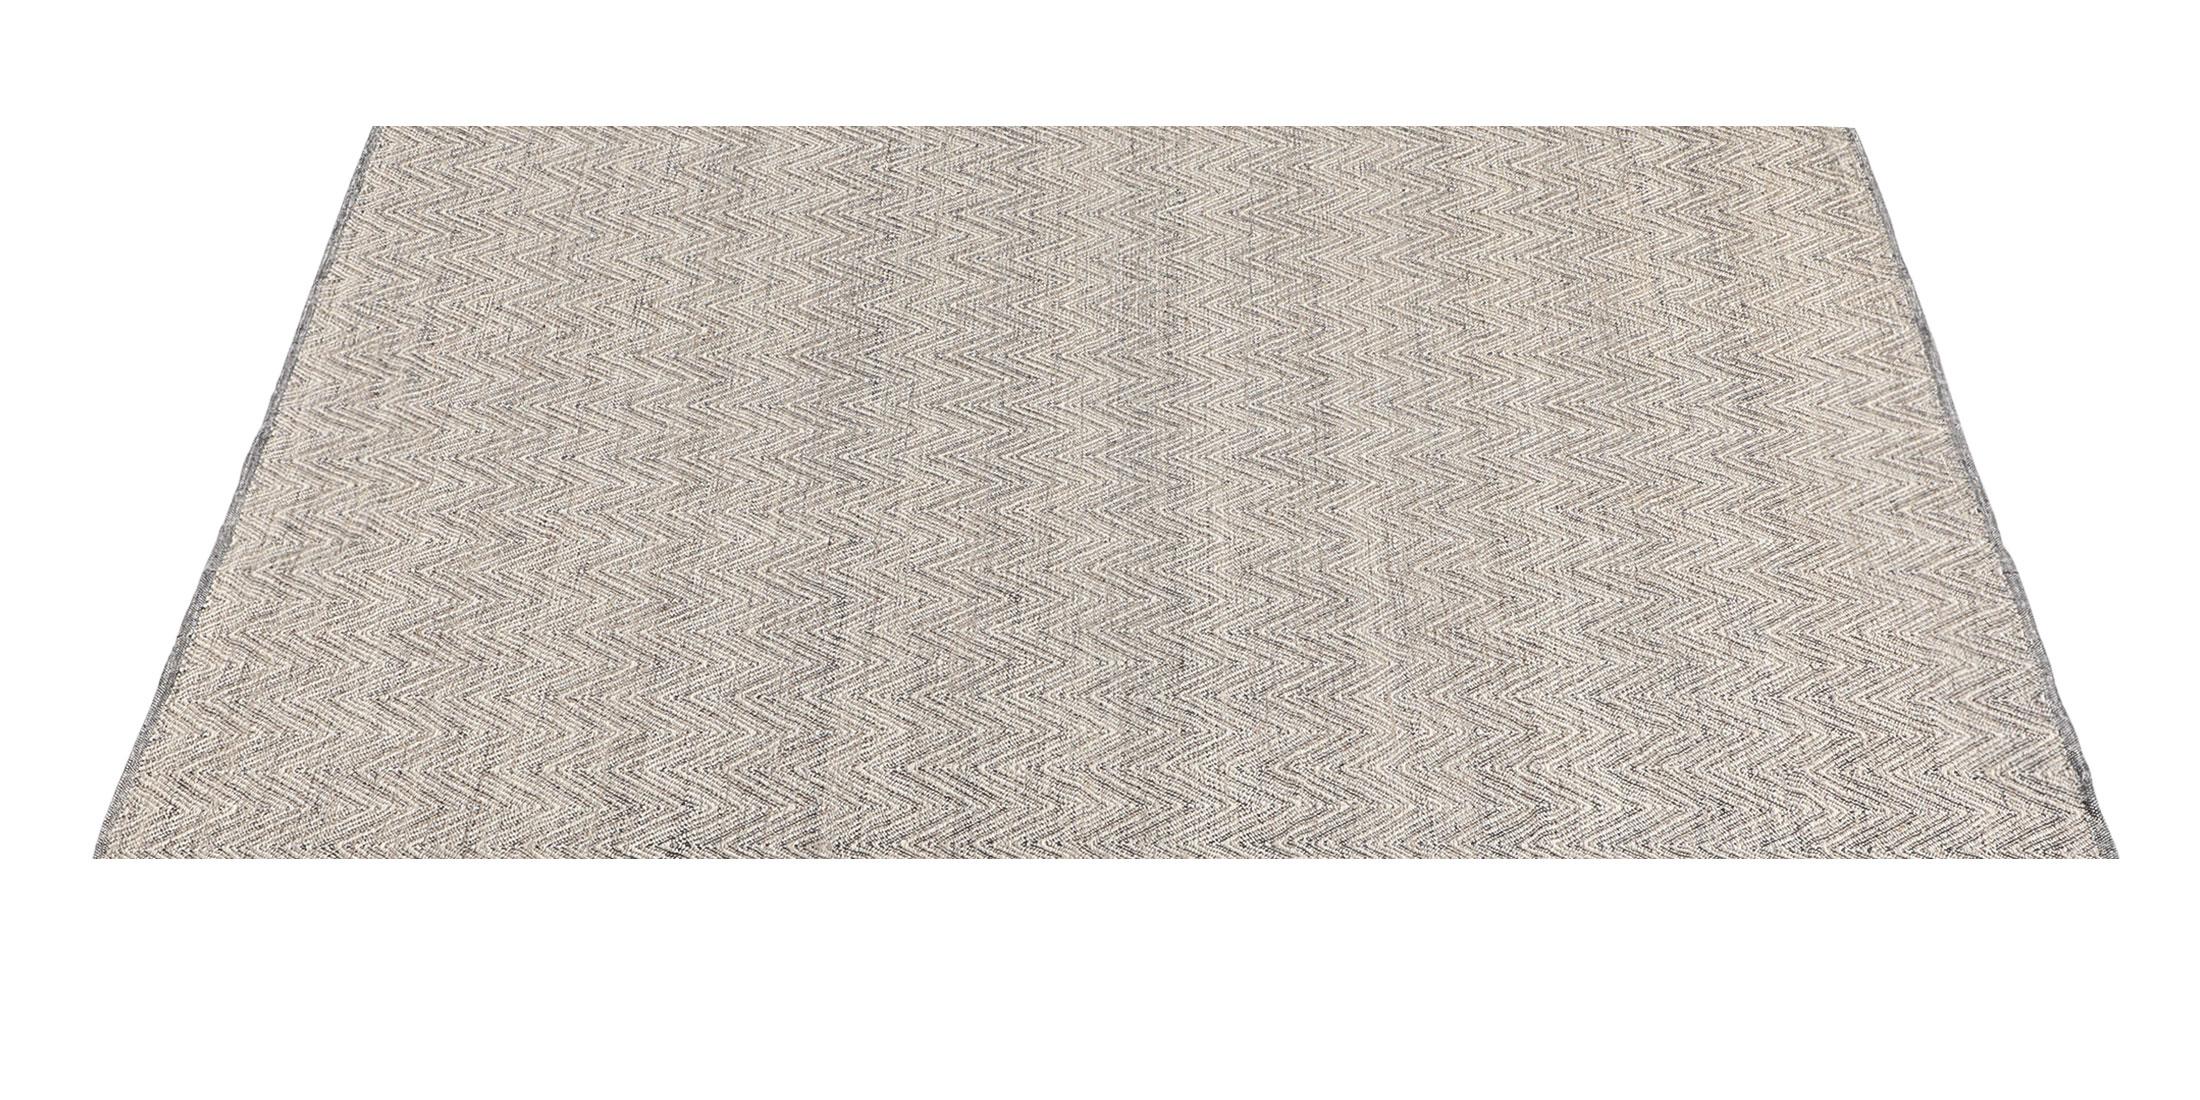 For Sale: Beige (Sand) Ben Soleimani Ceyah Rug– Hand-woven Plush Textured Wool + Linen Charcoal 8'x10' 2